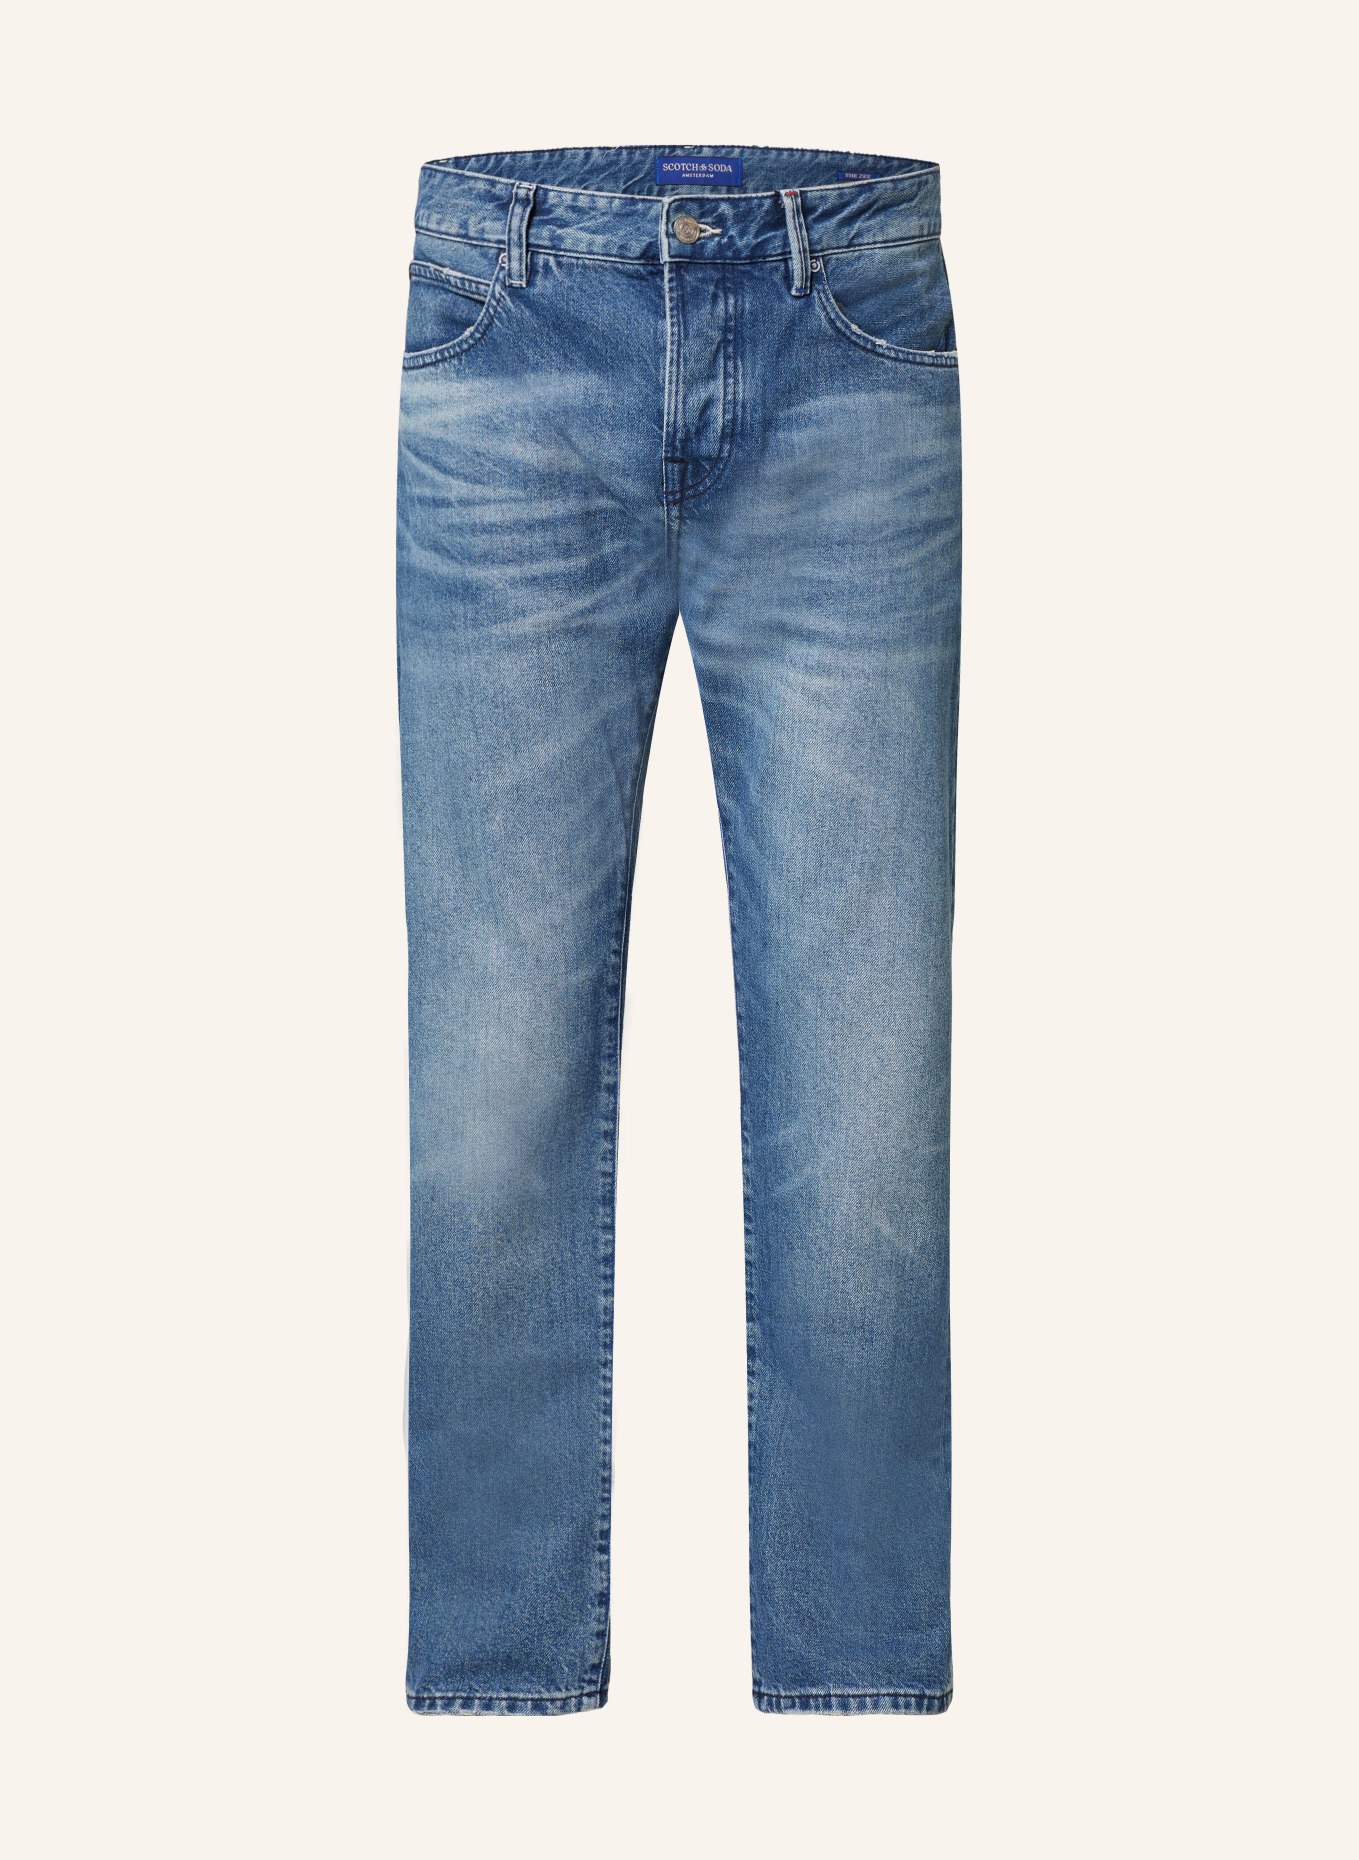 SCOTCH & SODA Jeans THE ZEE Straight Fit, Farbe: 7100 Ship Shape (Bild 1)